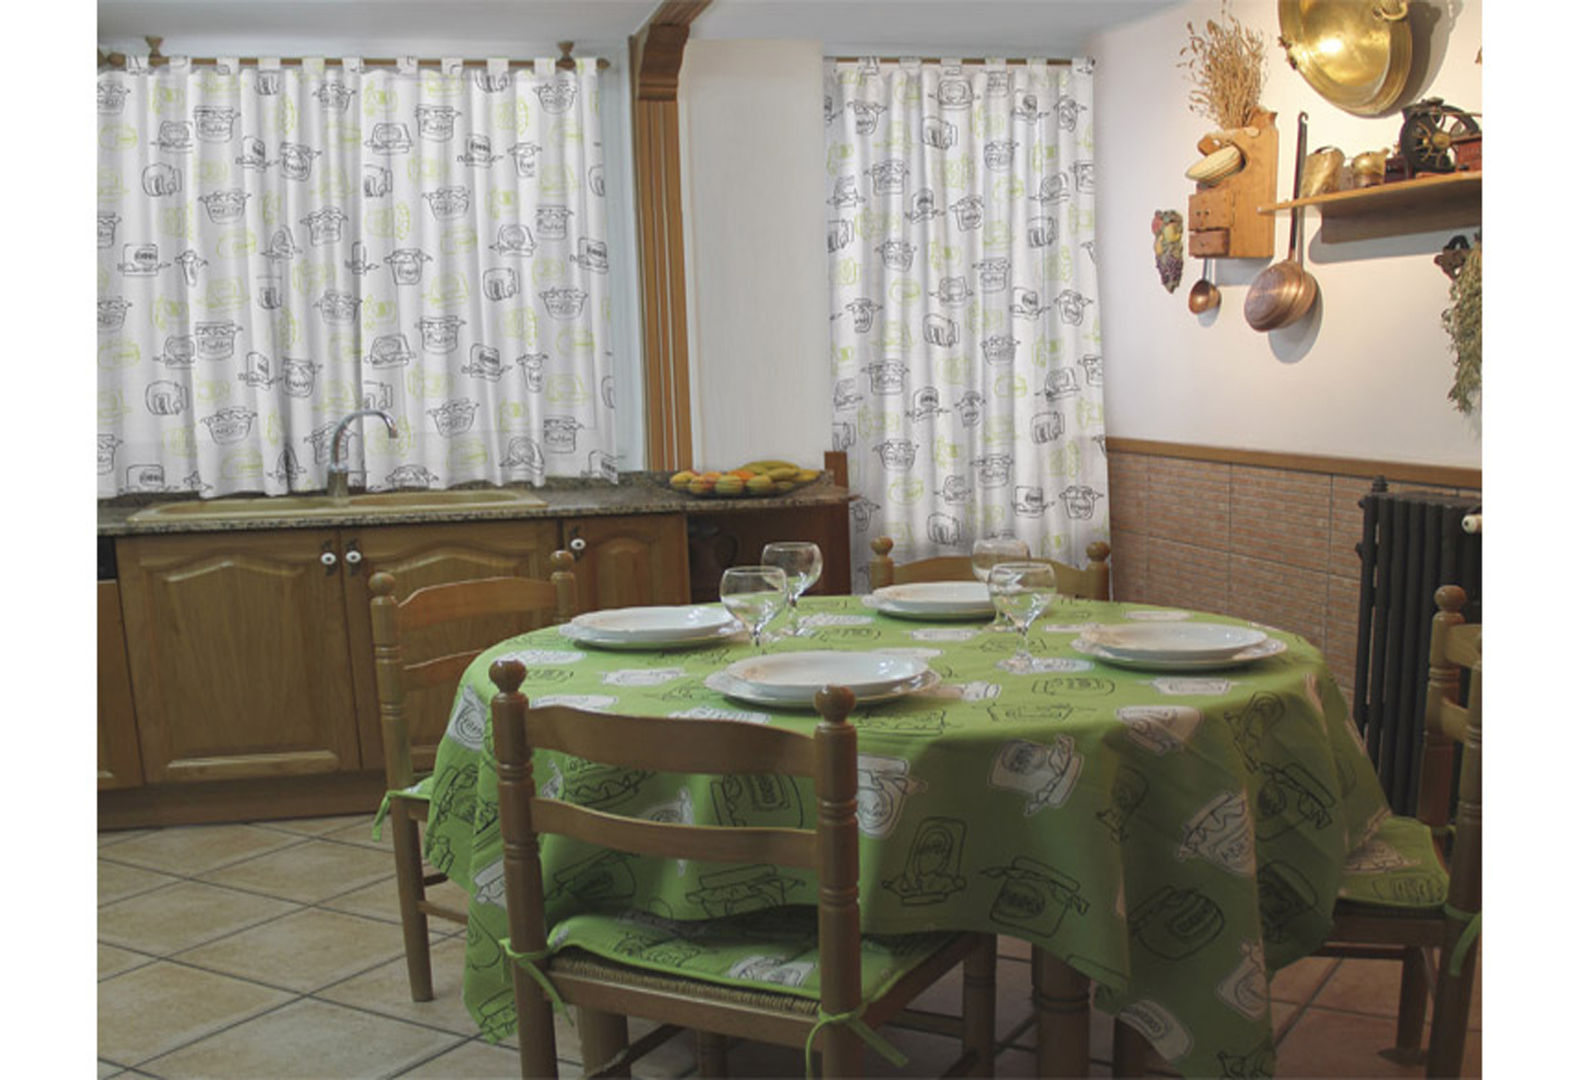 Cocinas rústicas mejor cortinas o estores 1  Cortinas para cocina,  Decoración de cocina, Decoración de cocina moderna